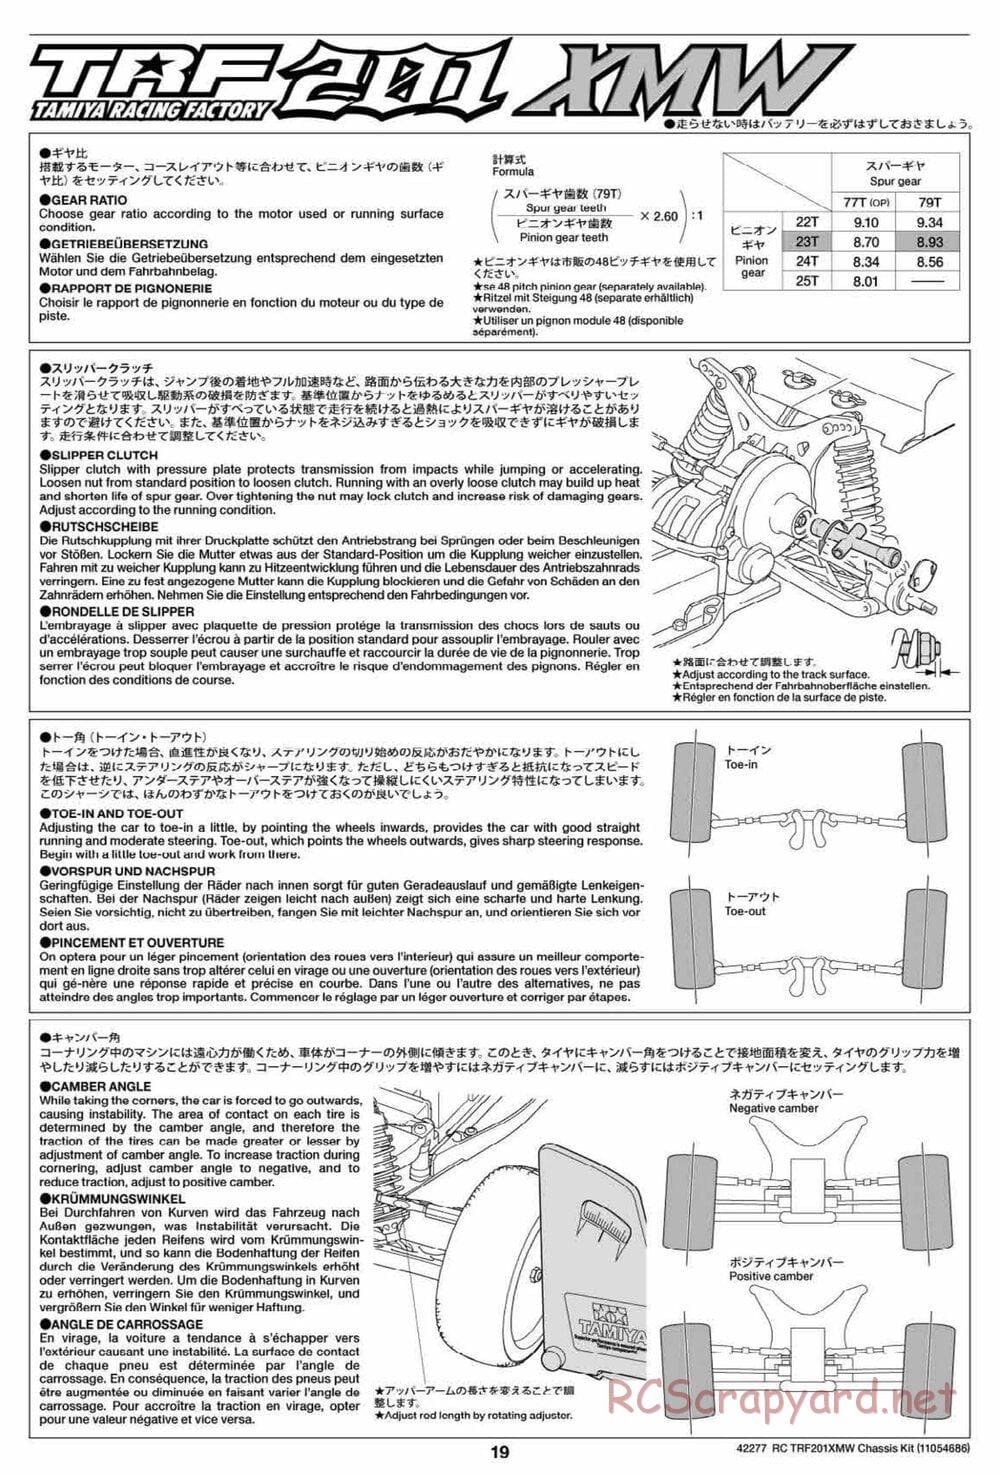 Tamiya - TRF201XMW Chassis - Manual - Page 19